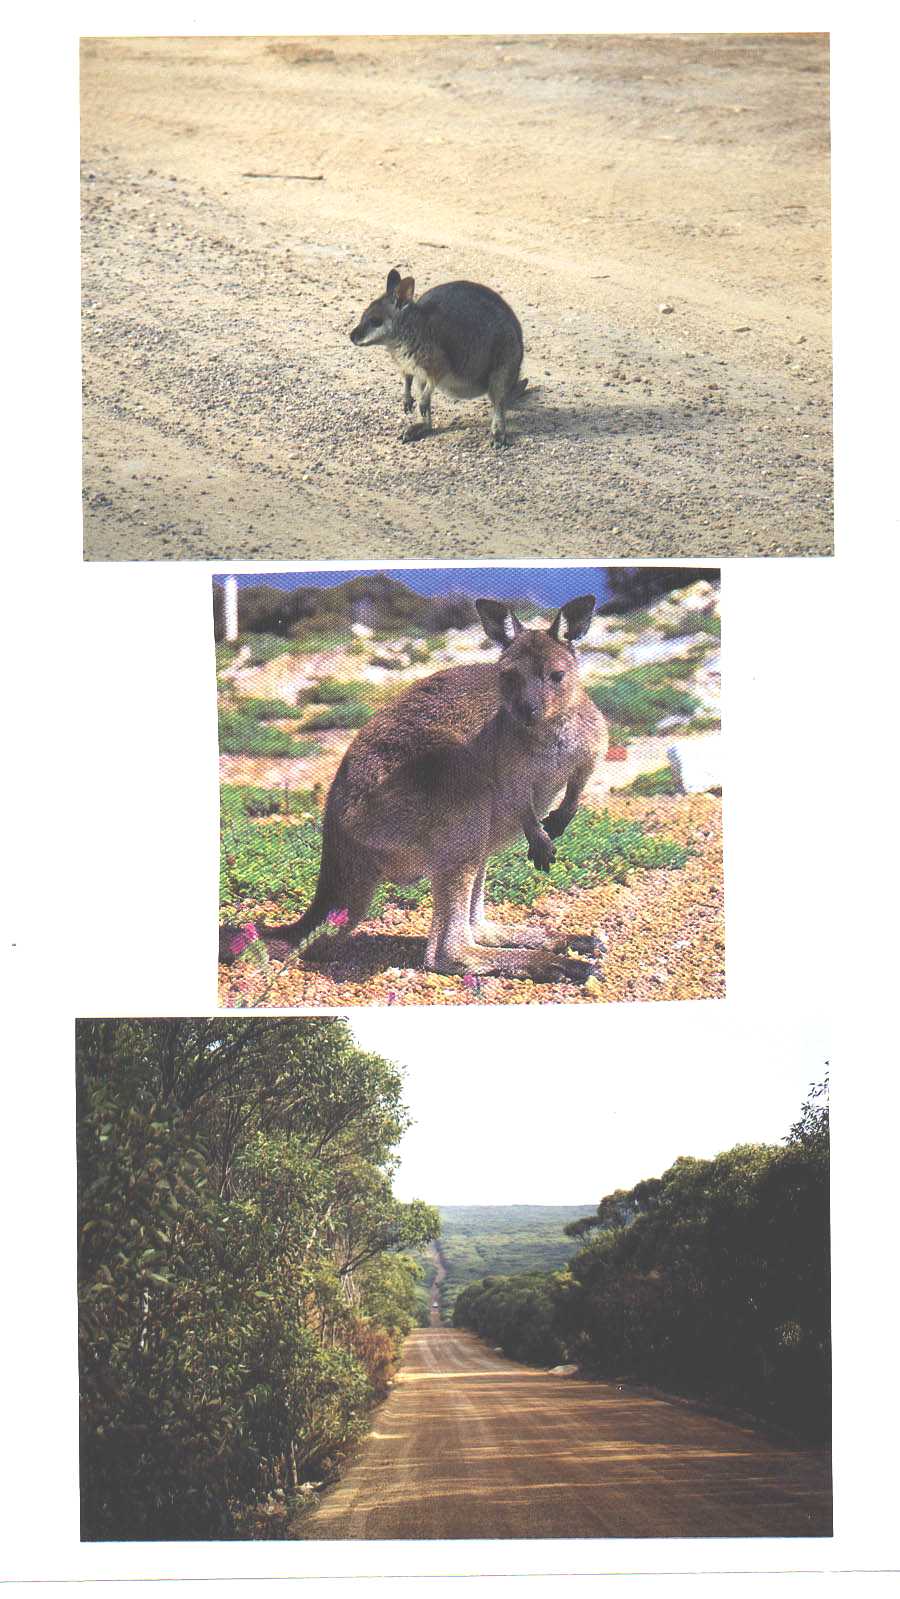 Kangaroo Island Australia